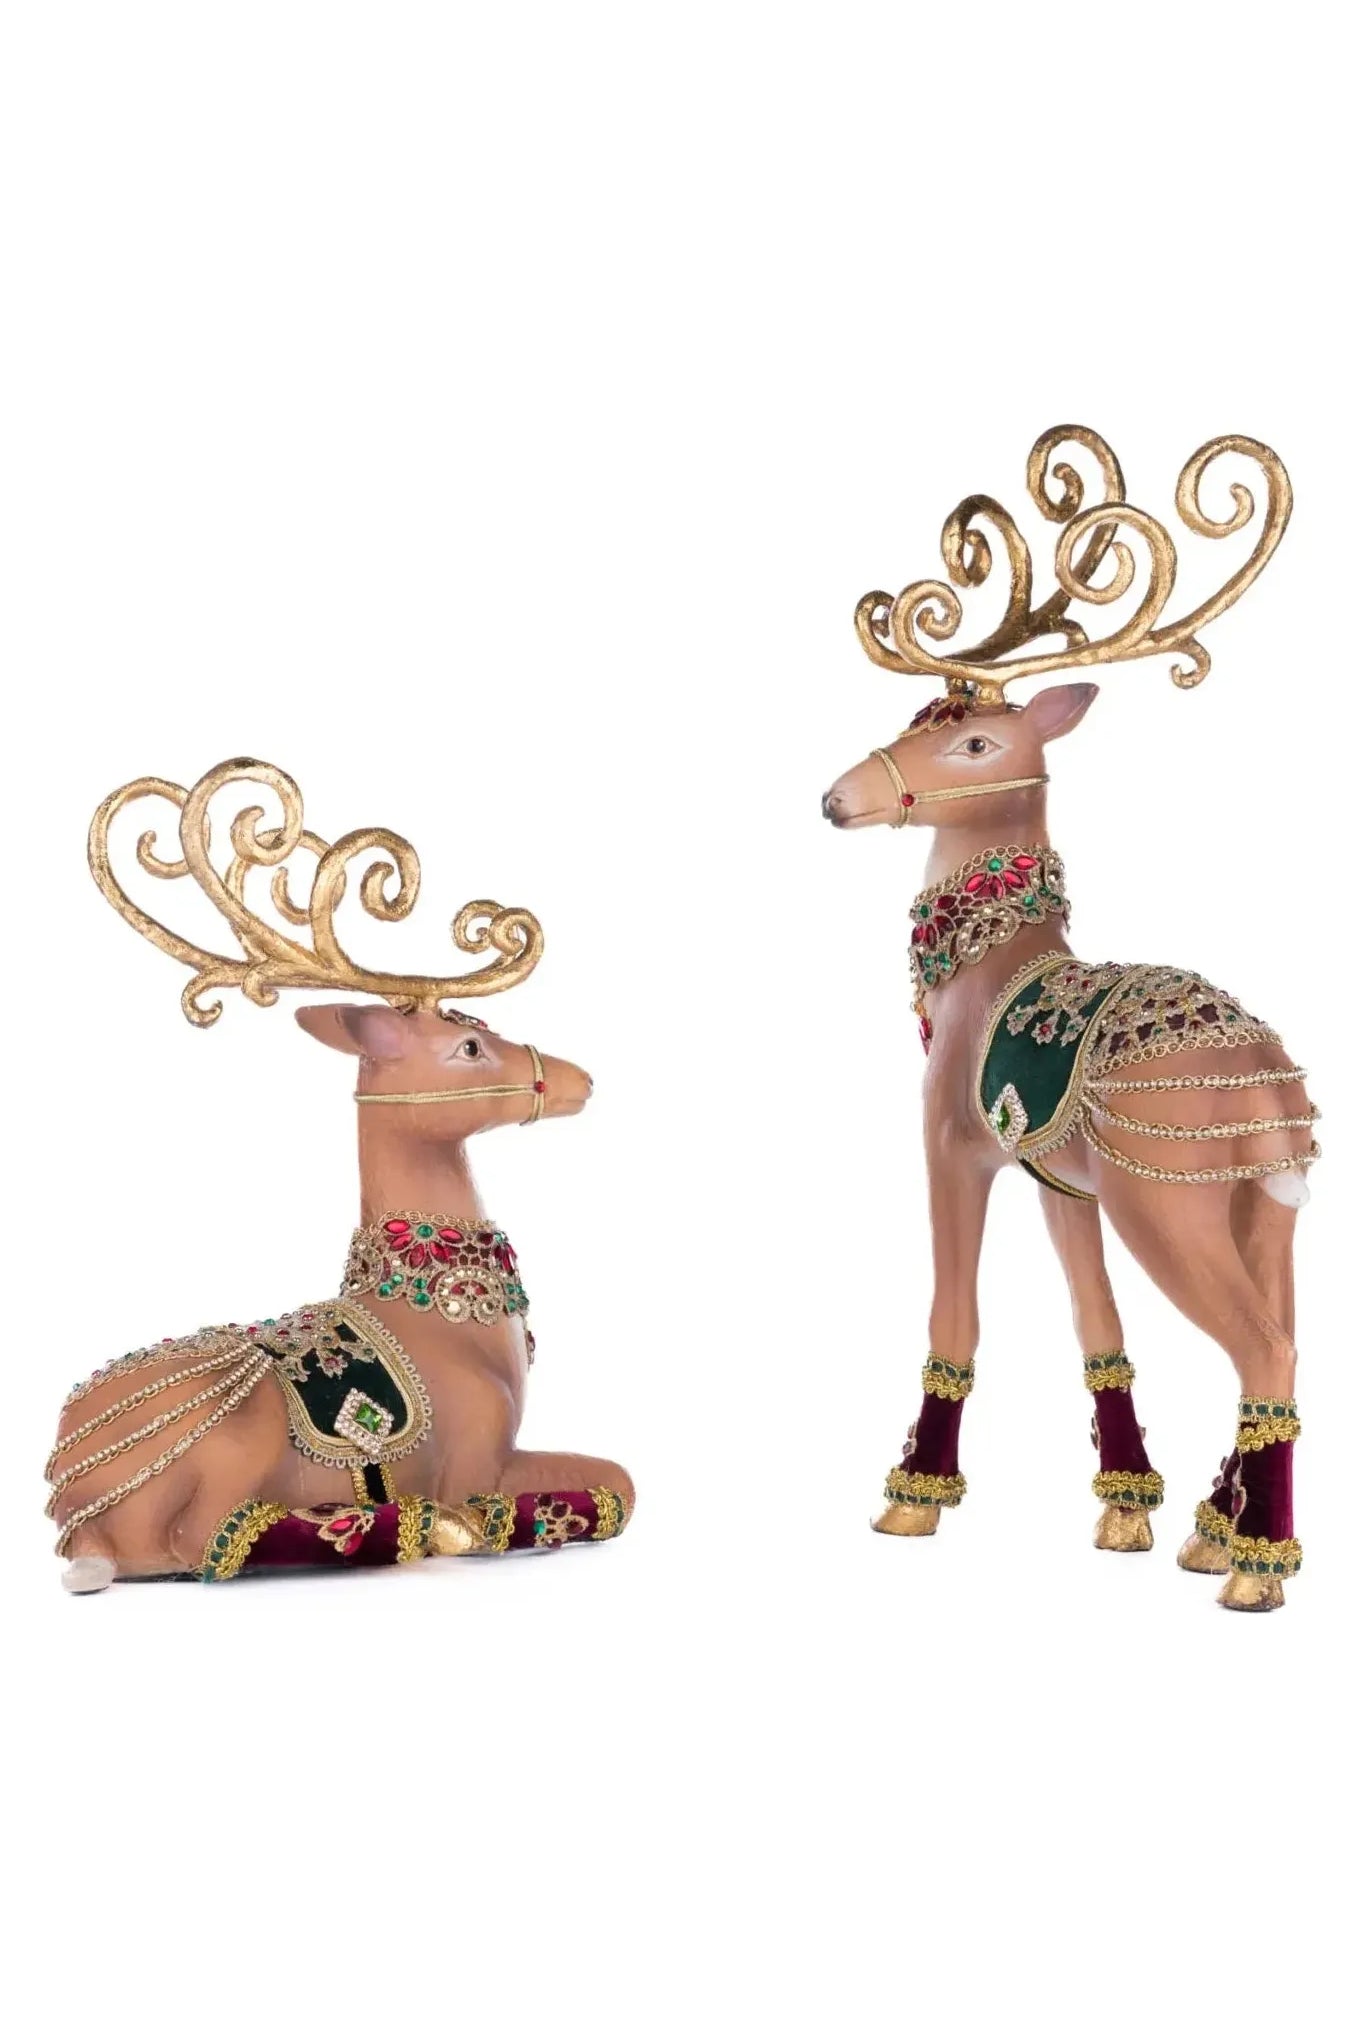 Shop For Christmas Castle Deer Assortment of 2 28-428542